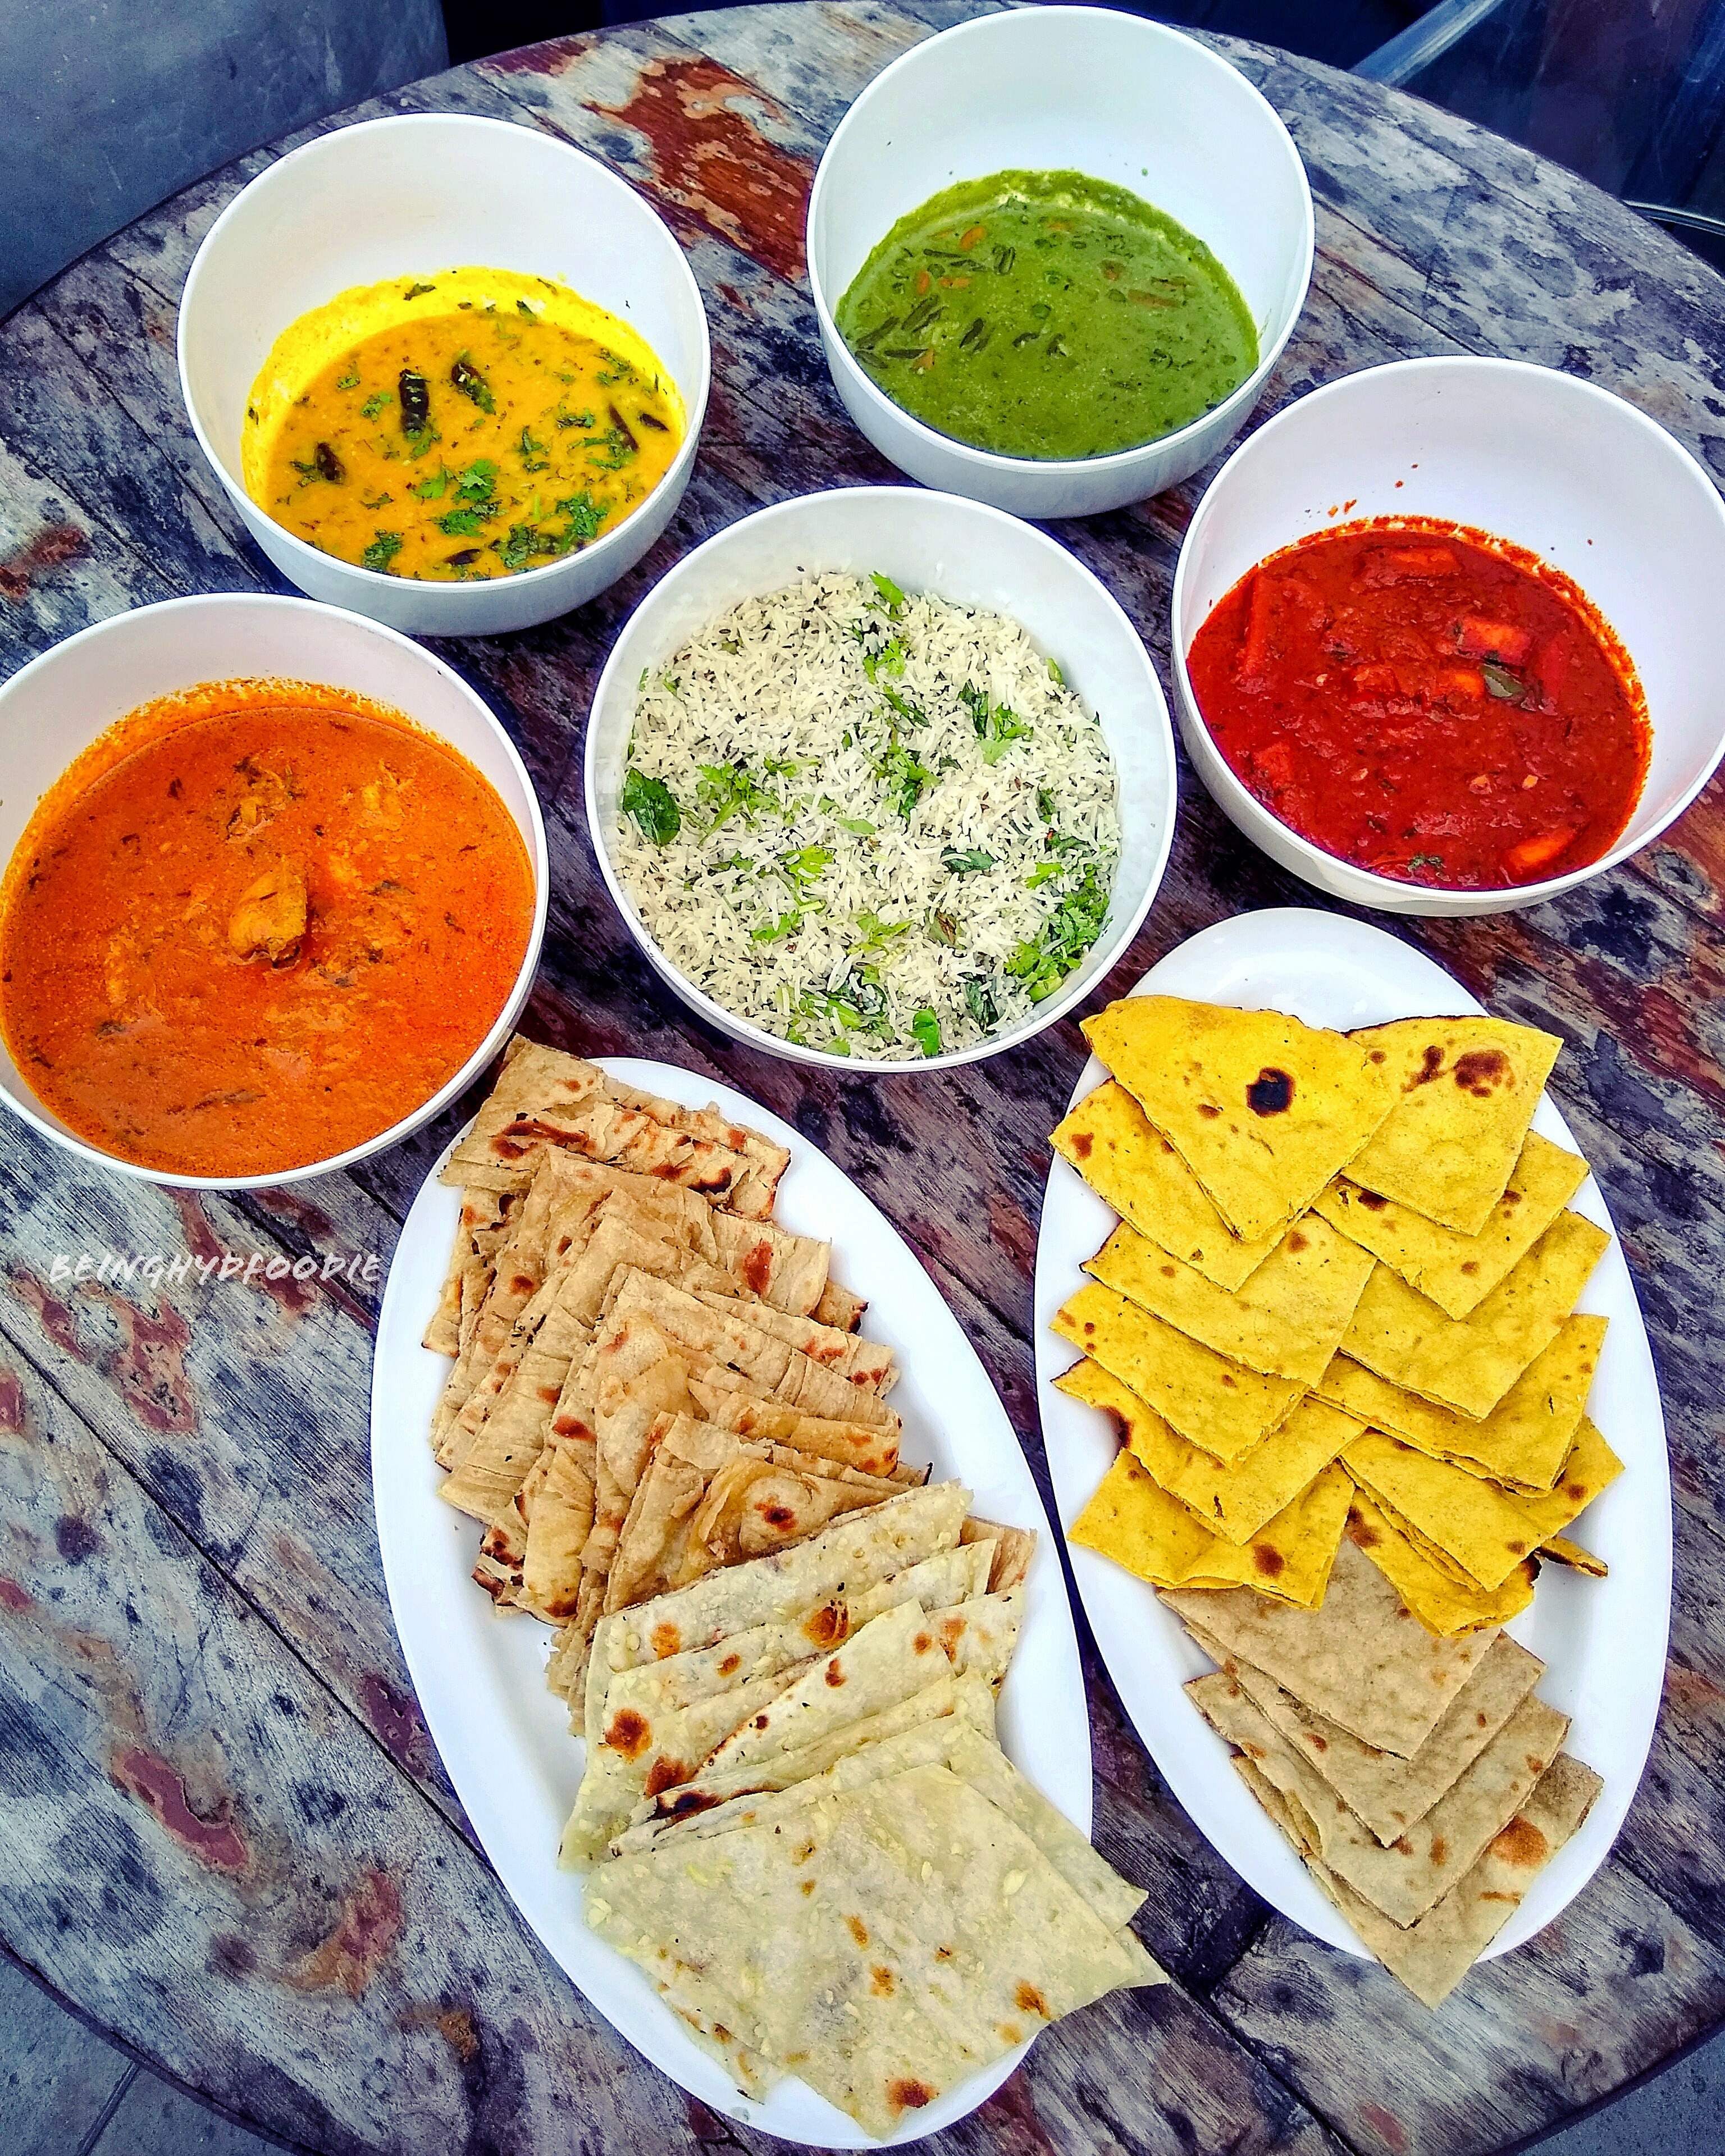 Dish,Food,Cuisine,Ingredient,Naan,Produce,Dip,Staple food,Indian cuisine,Nachos